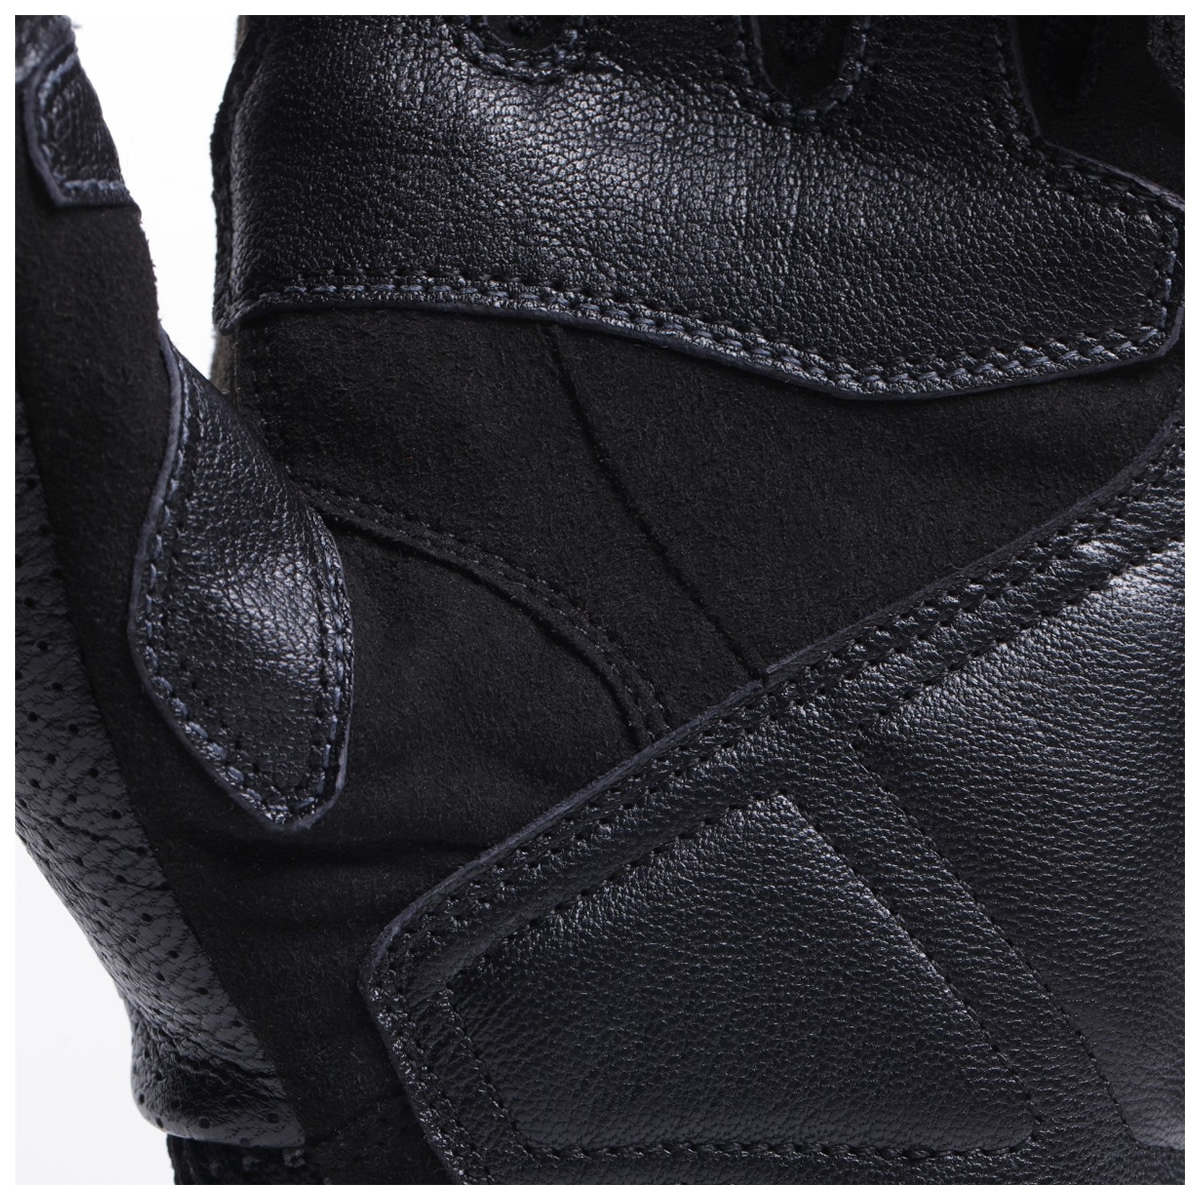 Dainese Handschuhe Torino, schwarz-olive